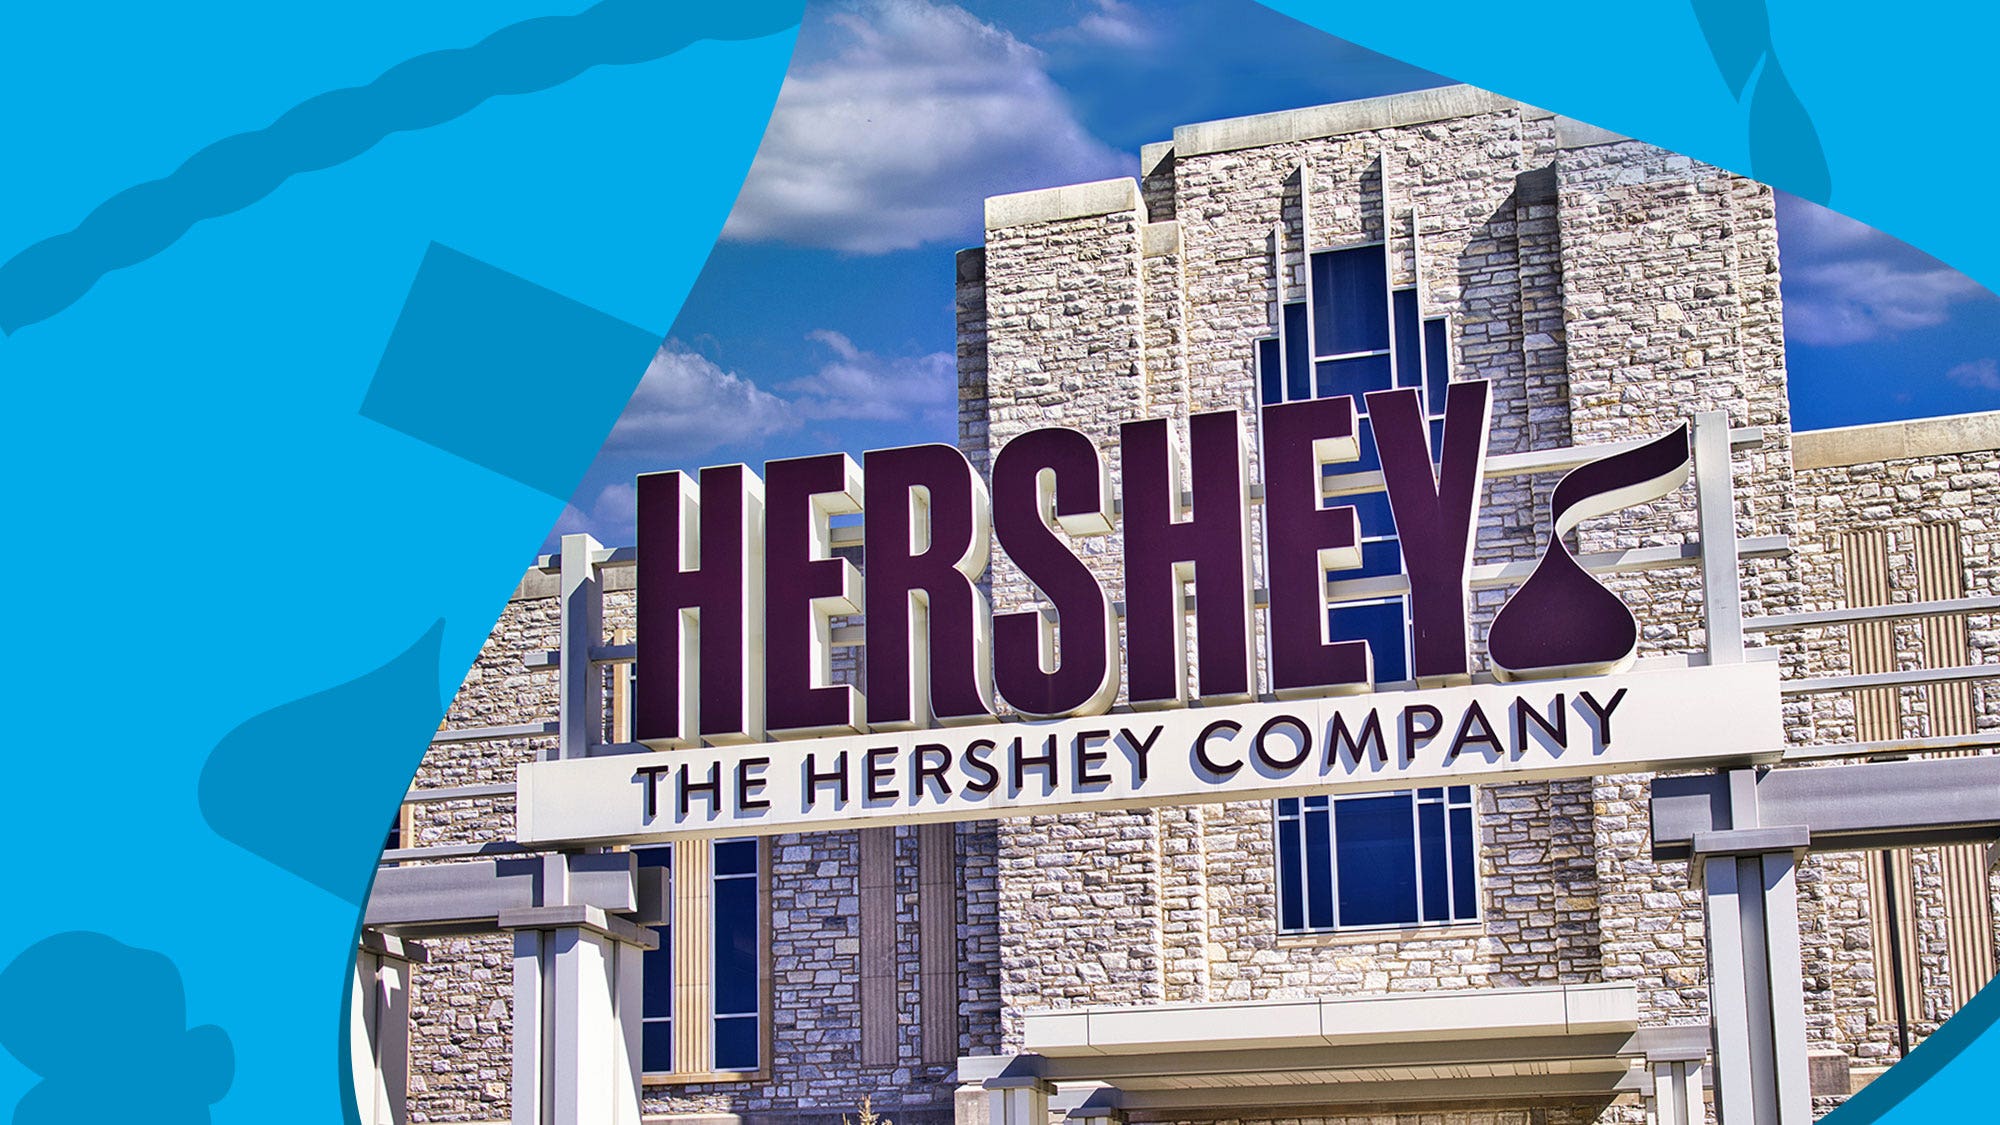 The Hershey Company Building